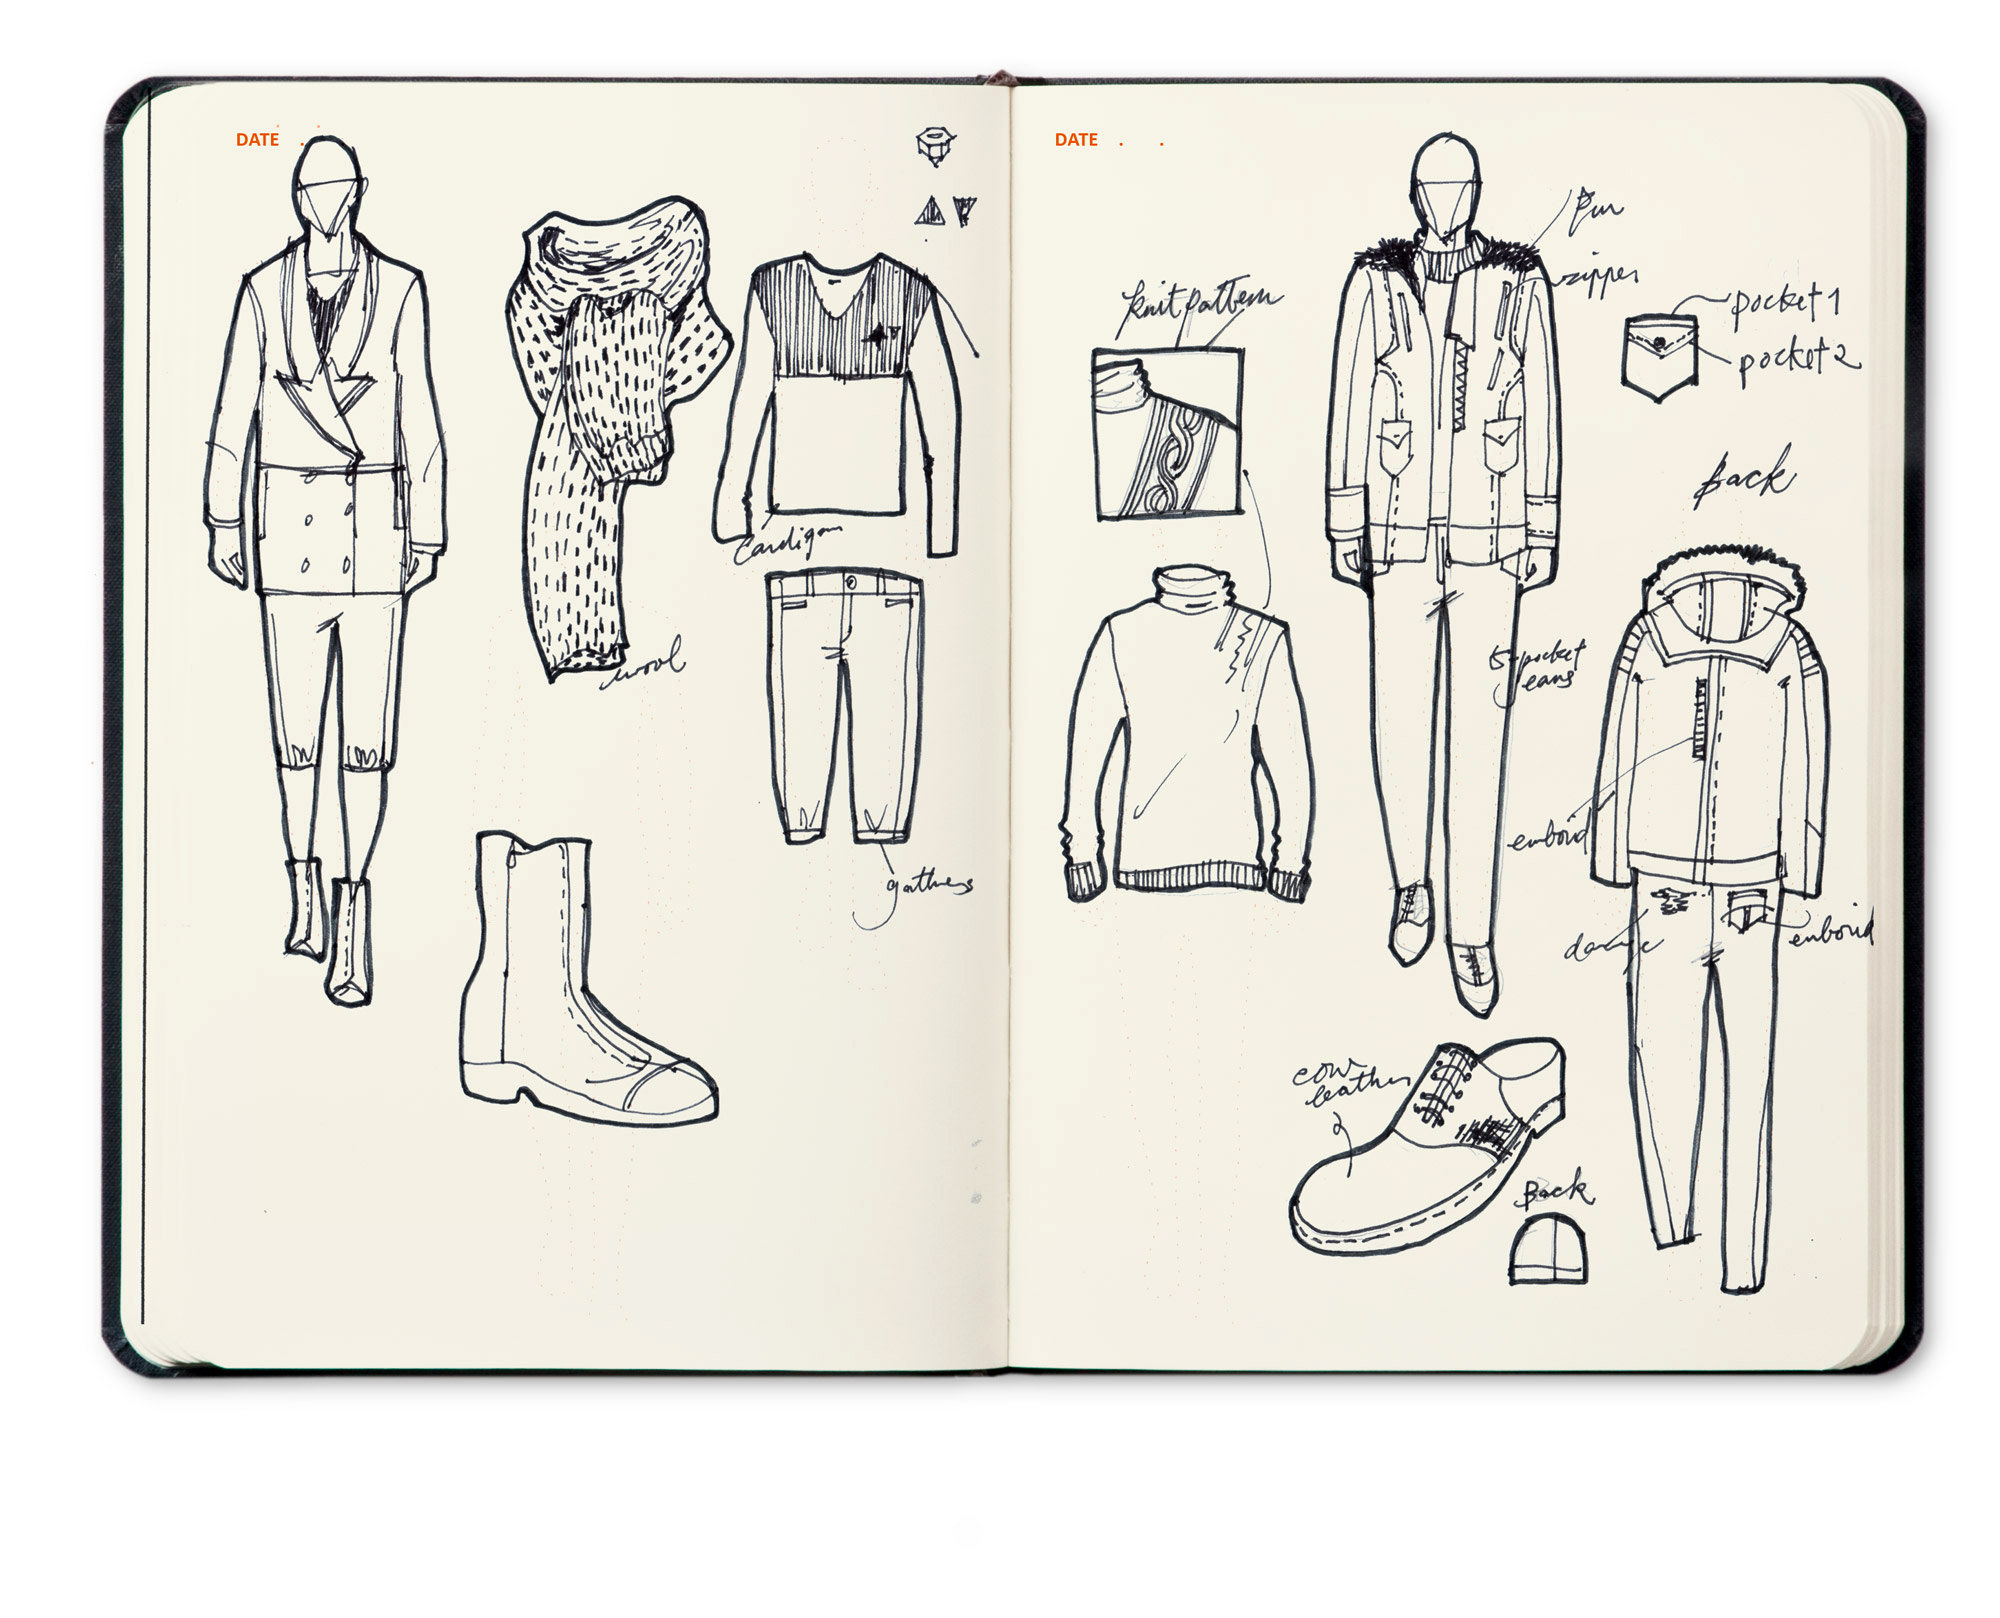 fashion design templates